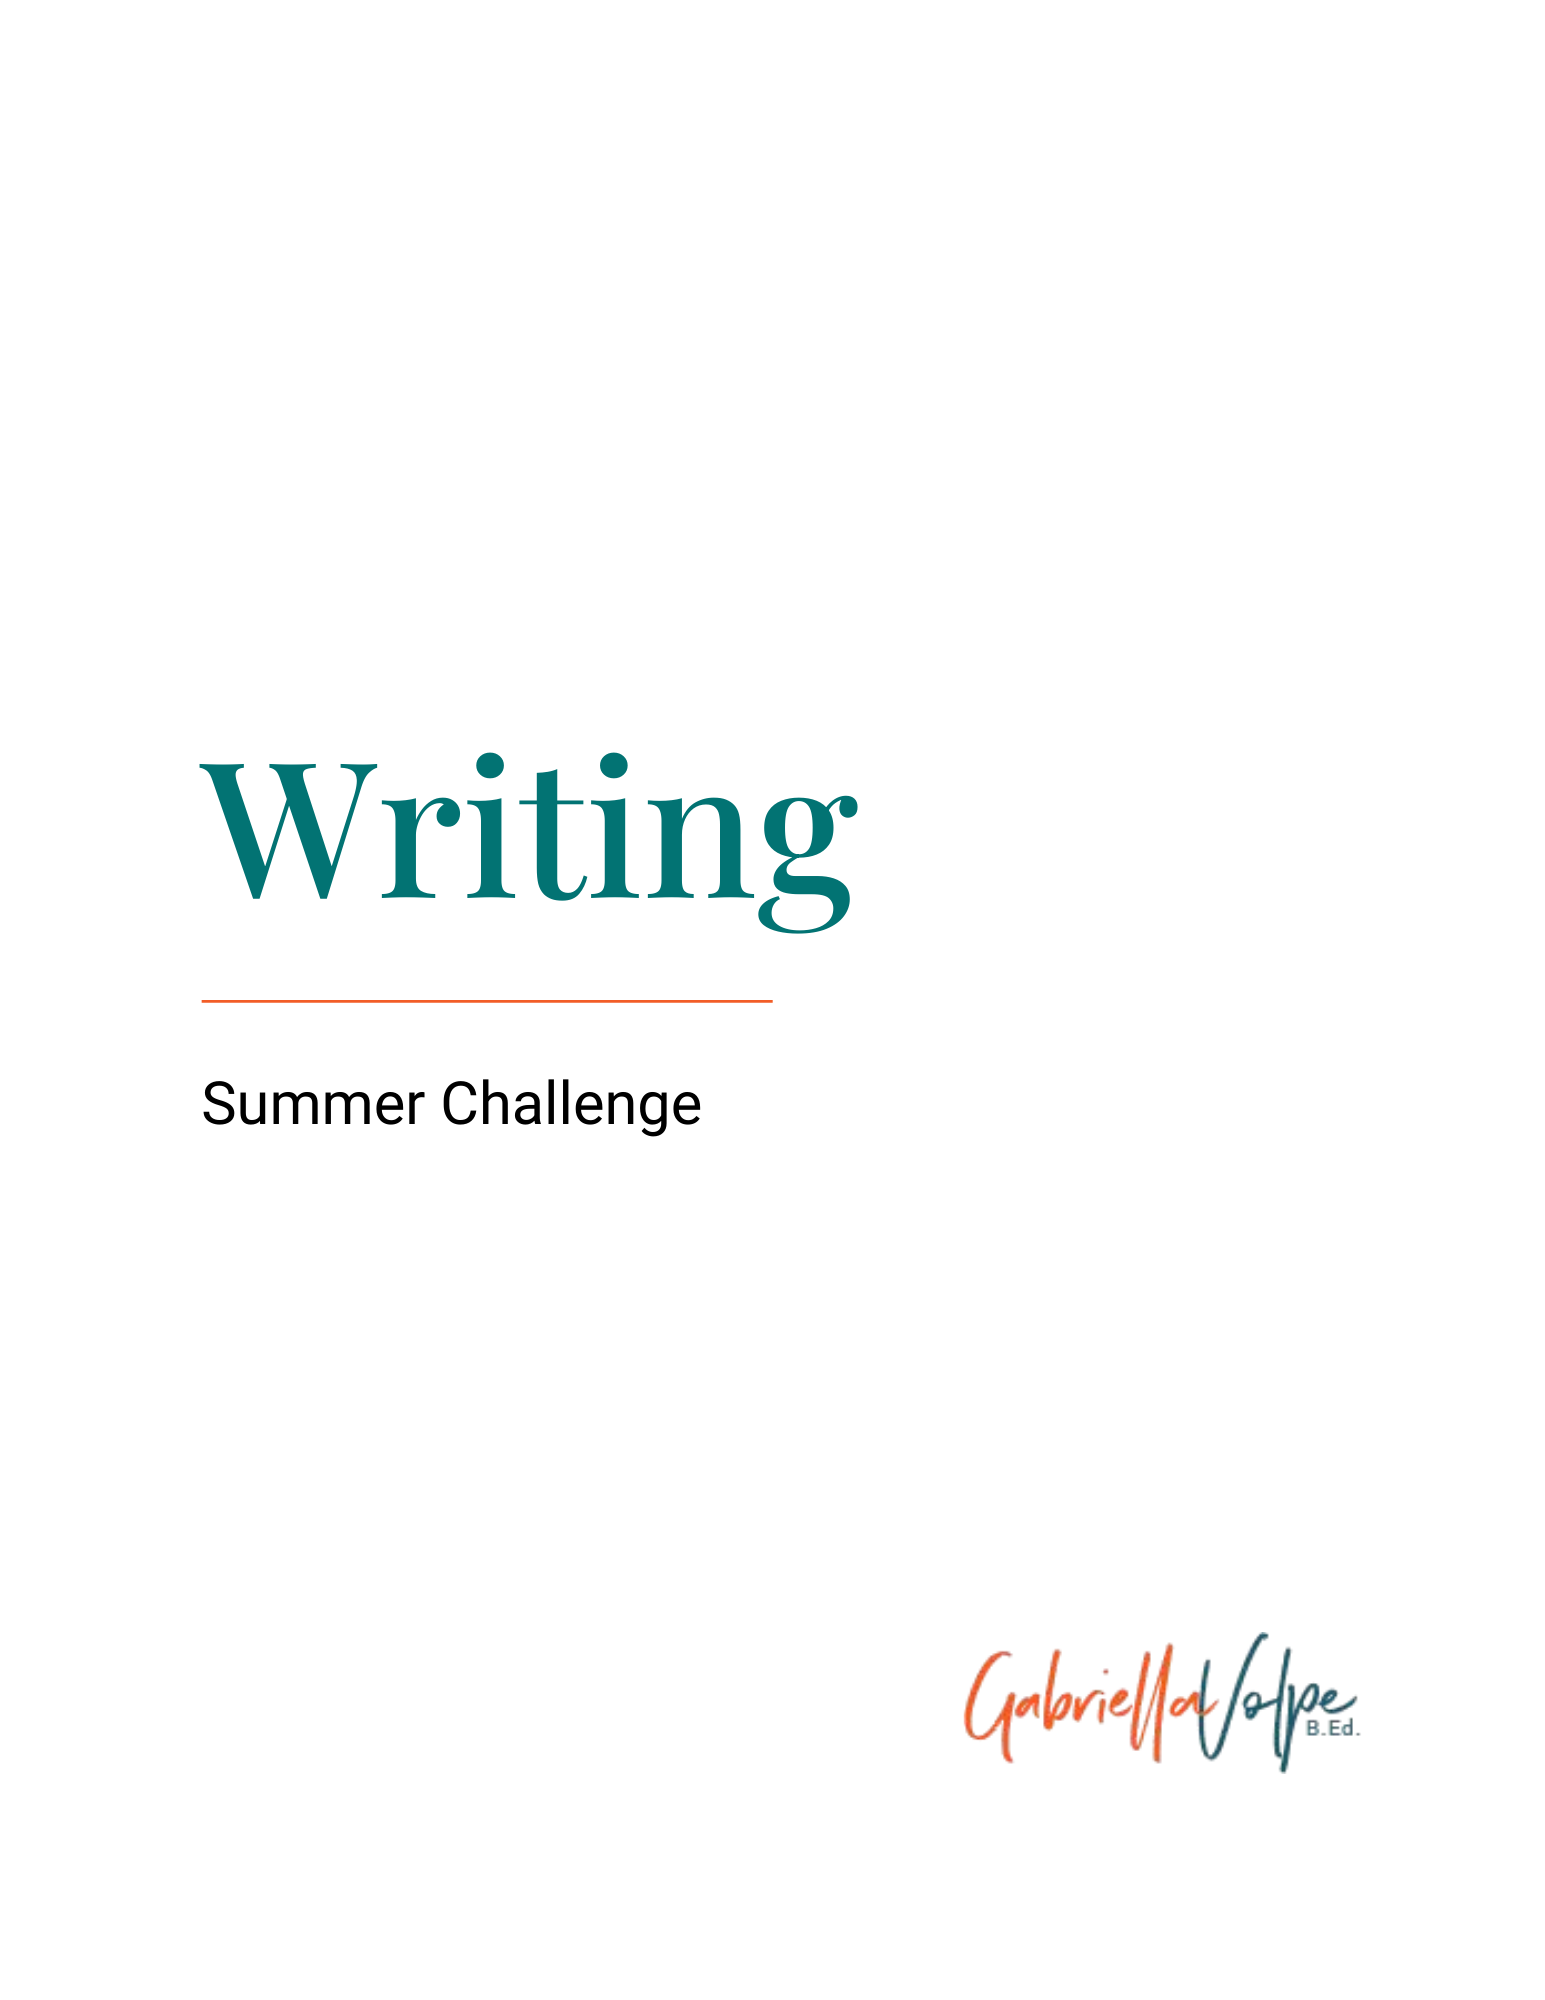 Writing Summer Challenge